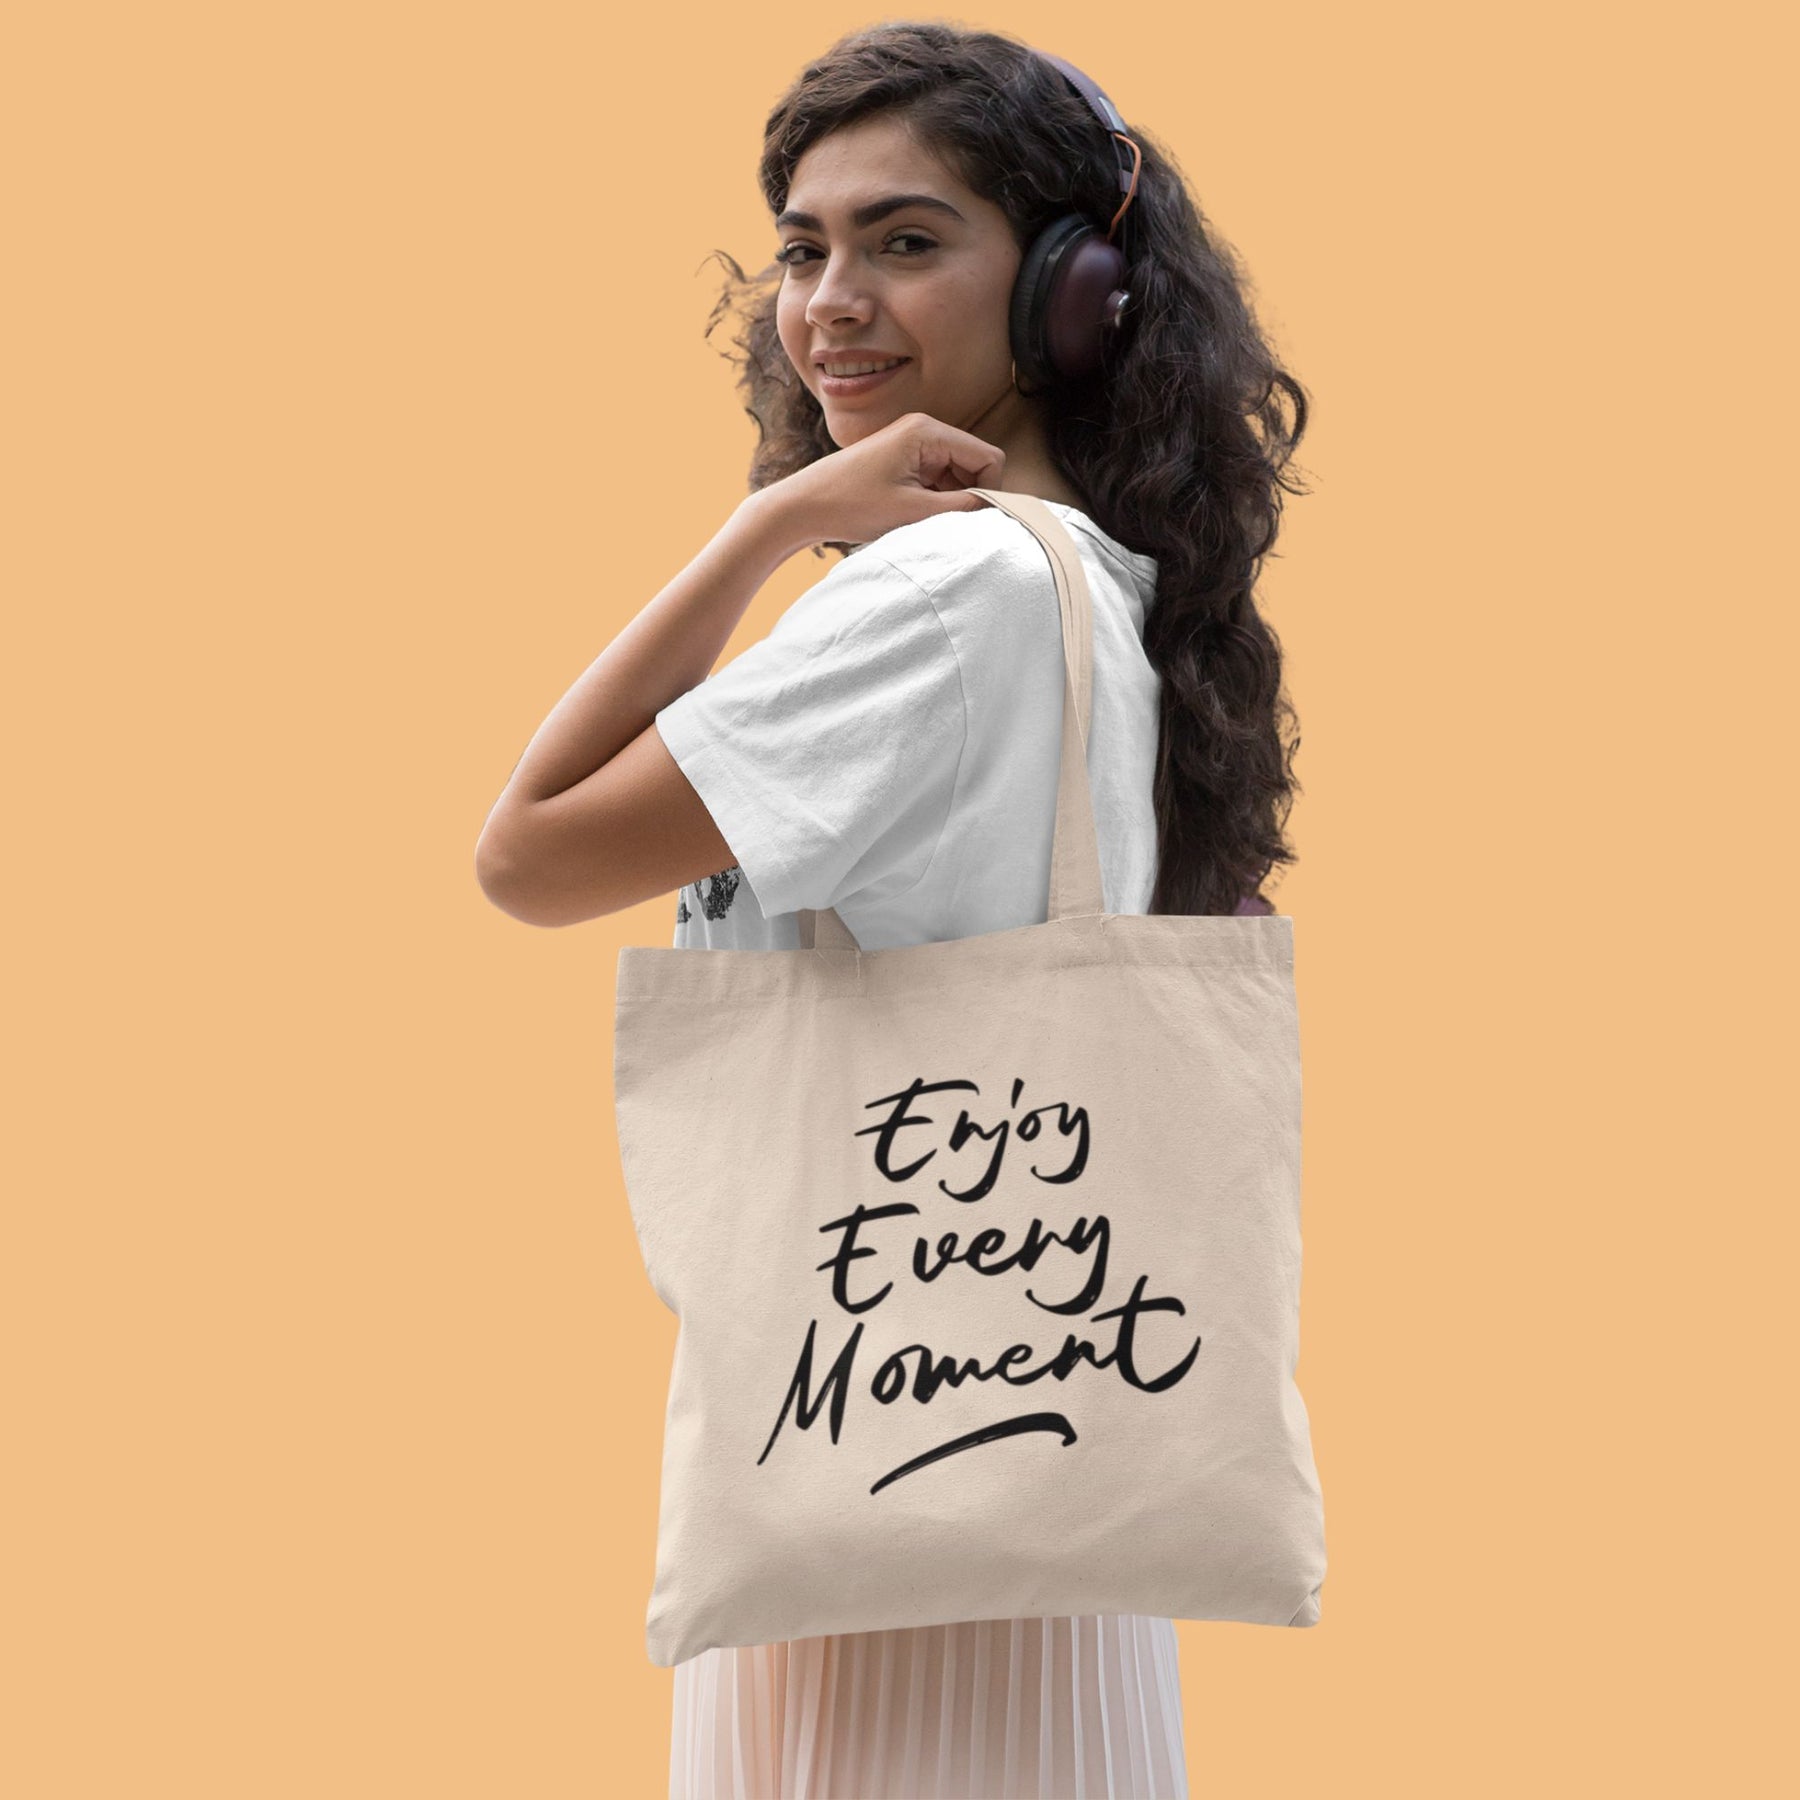 enjoy-every-moment-cotton-printed-creamy-white-tote-bag-gogirgit-3